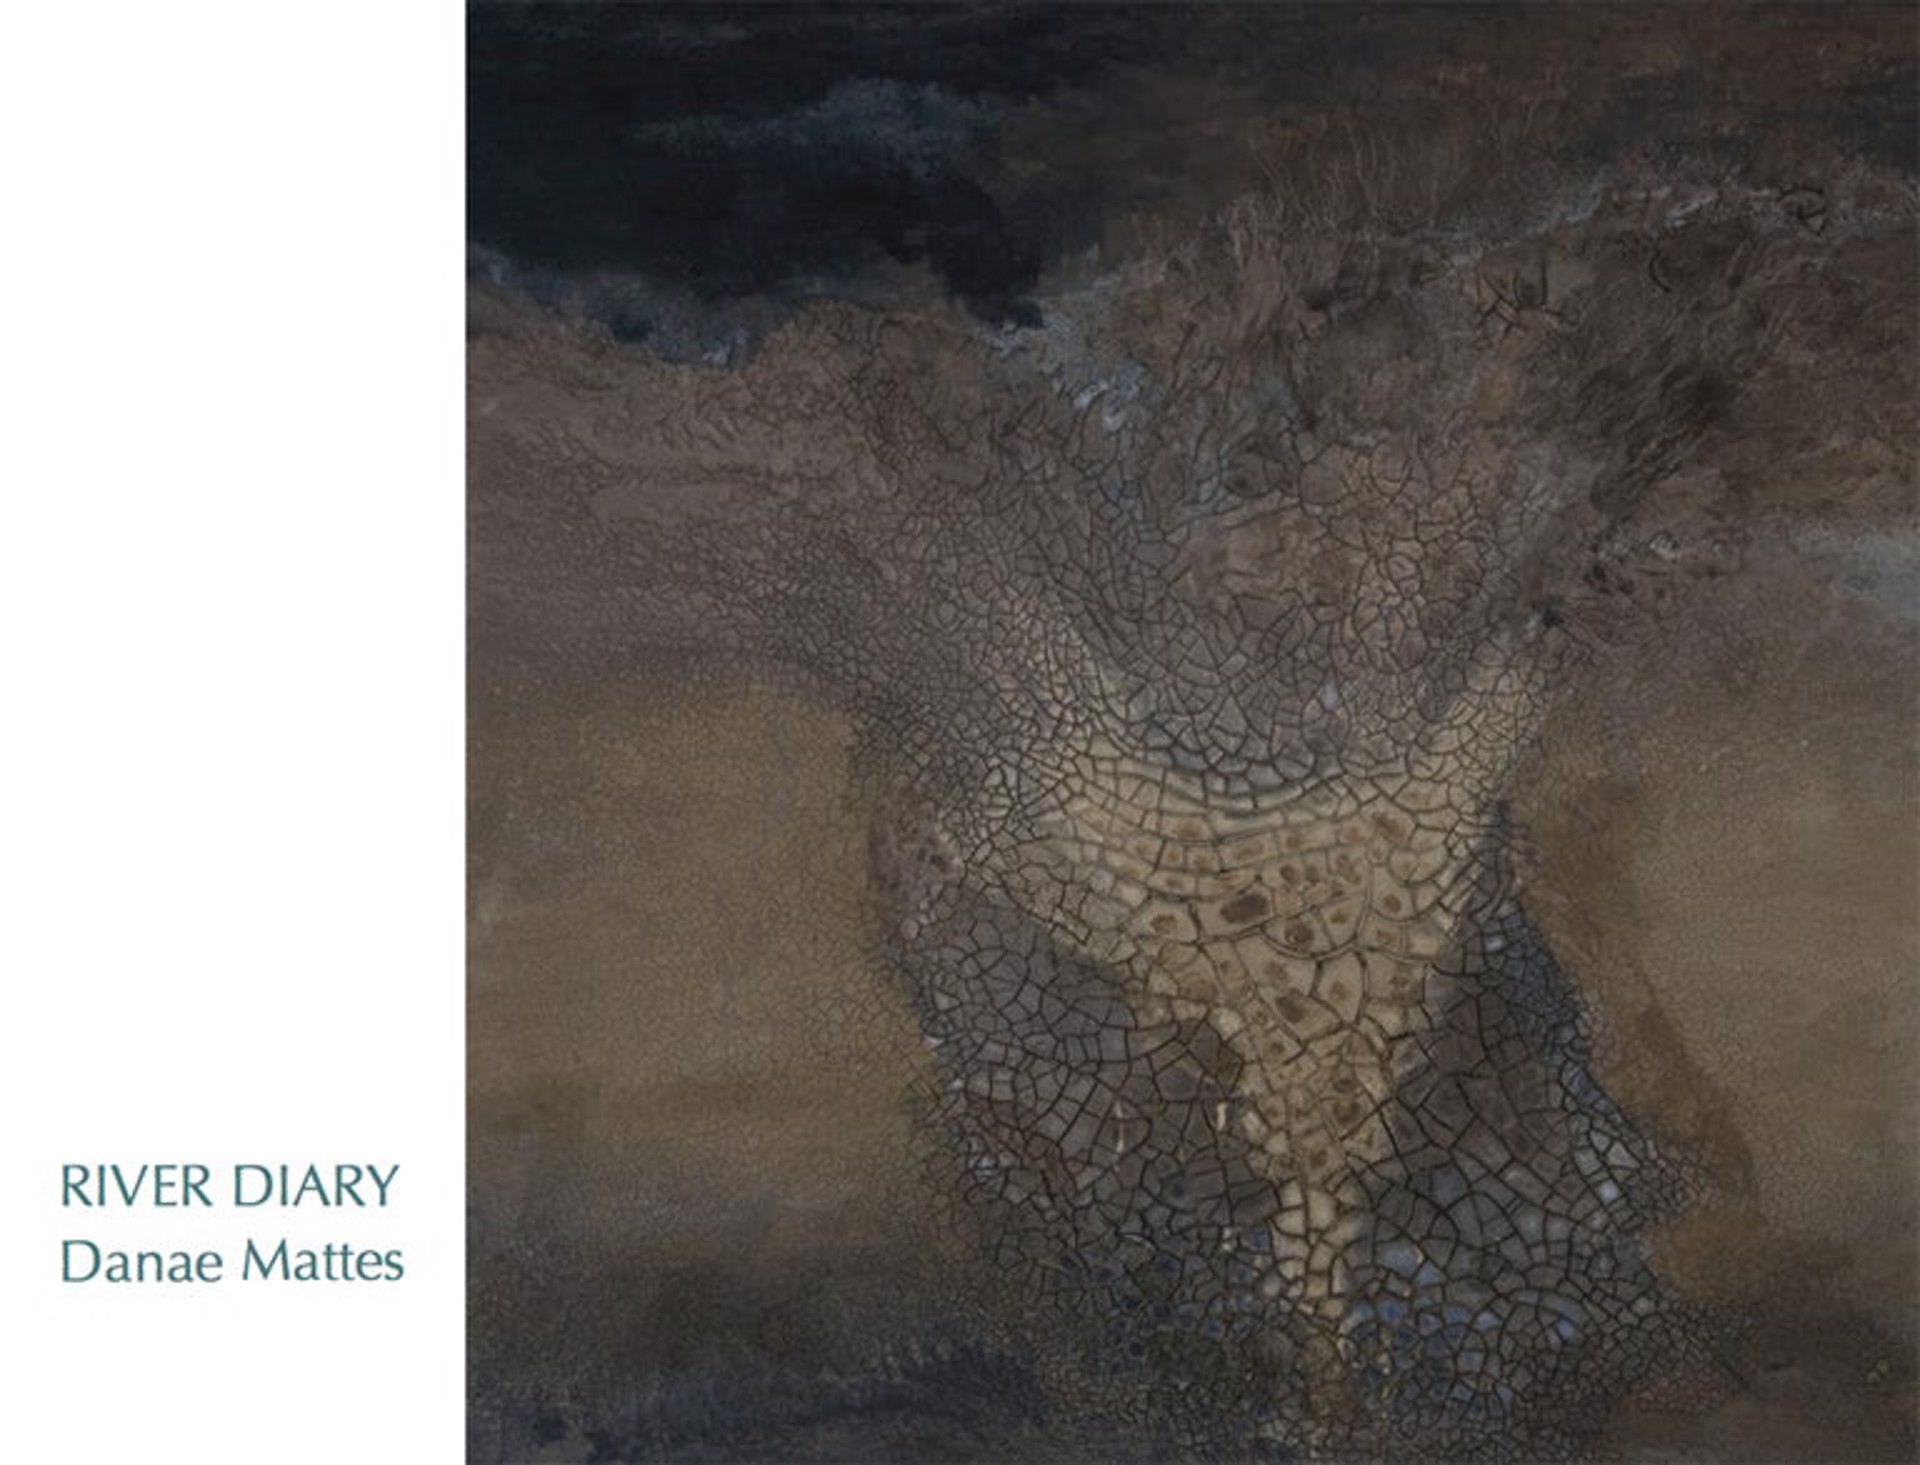 Danae Mattes: River Diary by Danae Mattes